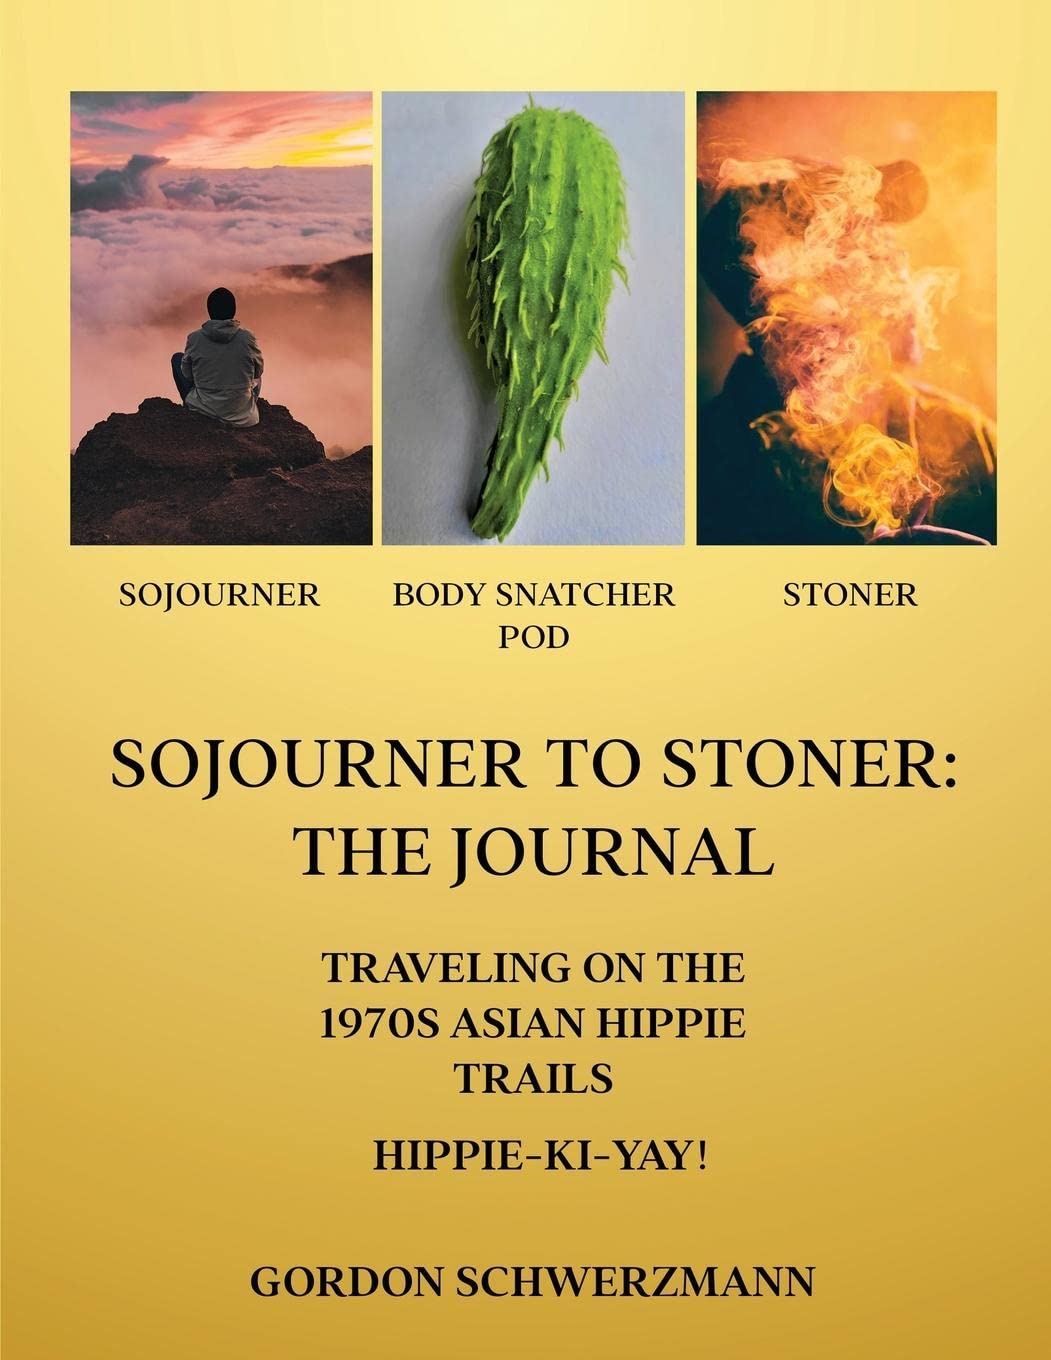 Author's Tranquility Press Presents "Sojourner to Stoner: The Journal" by Gordon Schwerzmann